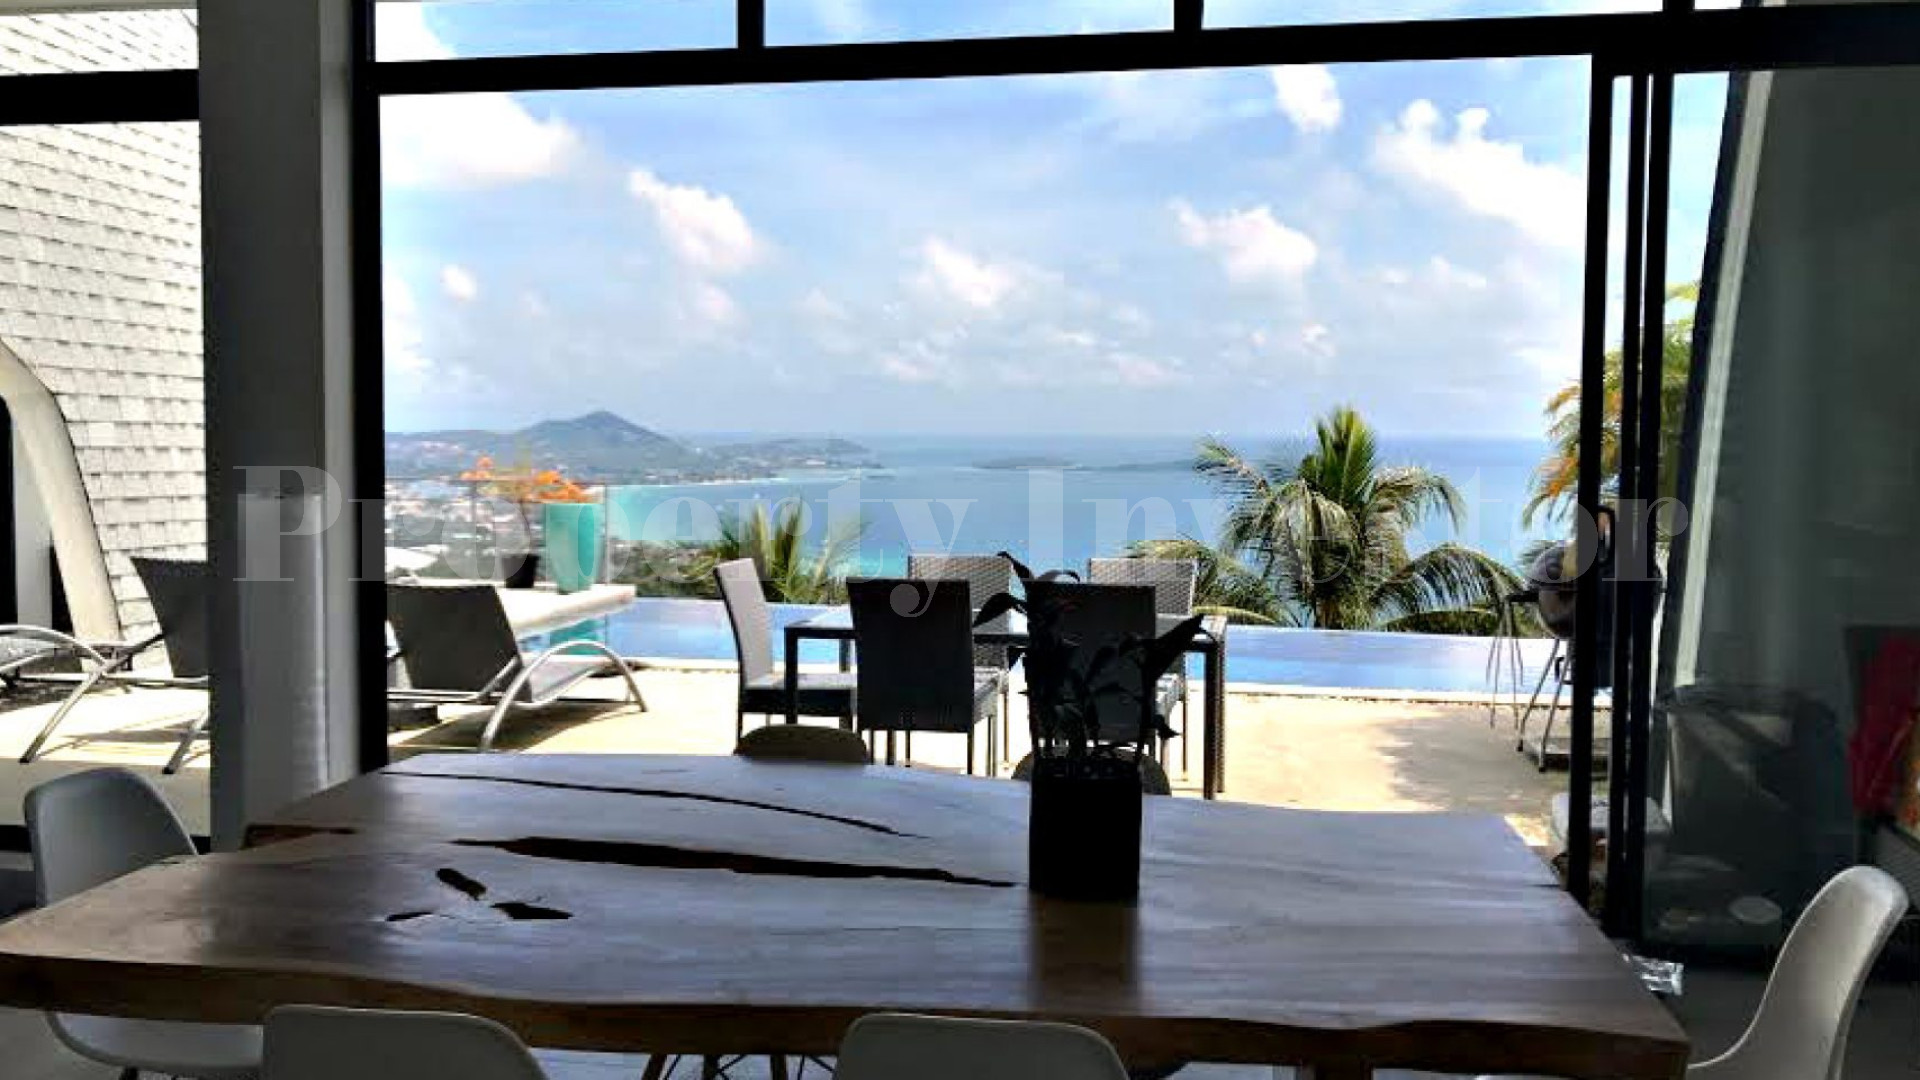 3 Bedroom Panoramic Seaview Villa for Sale in Koh Samui, Thailand